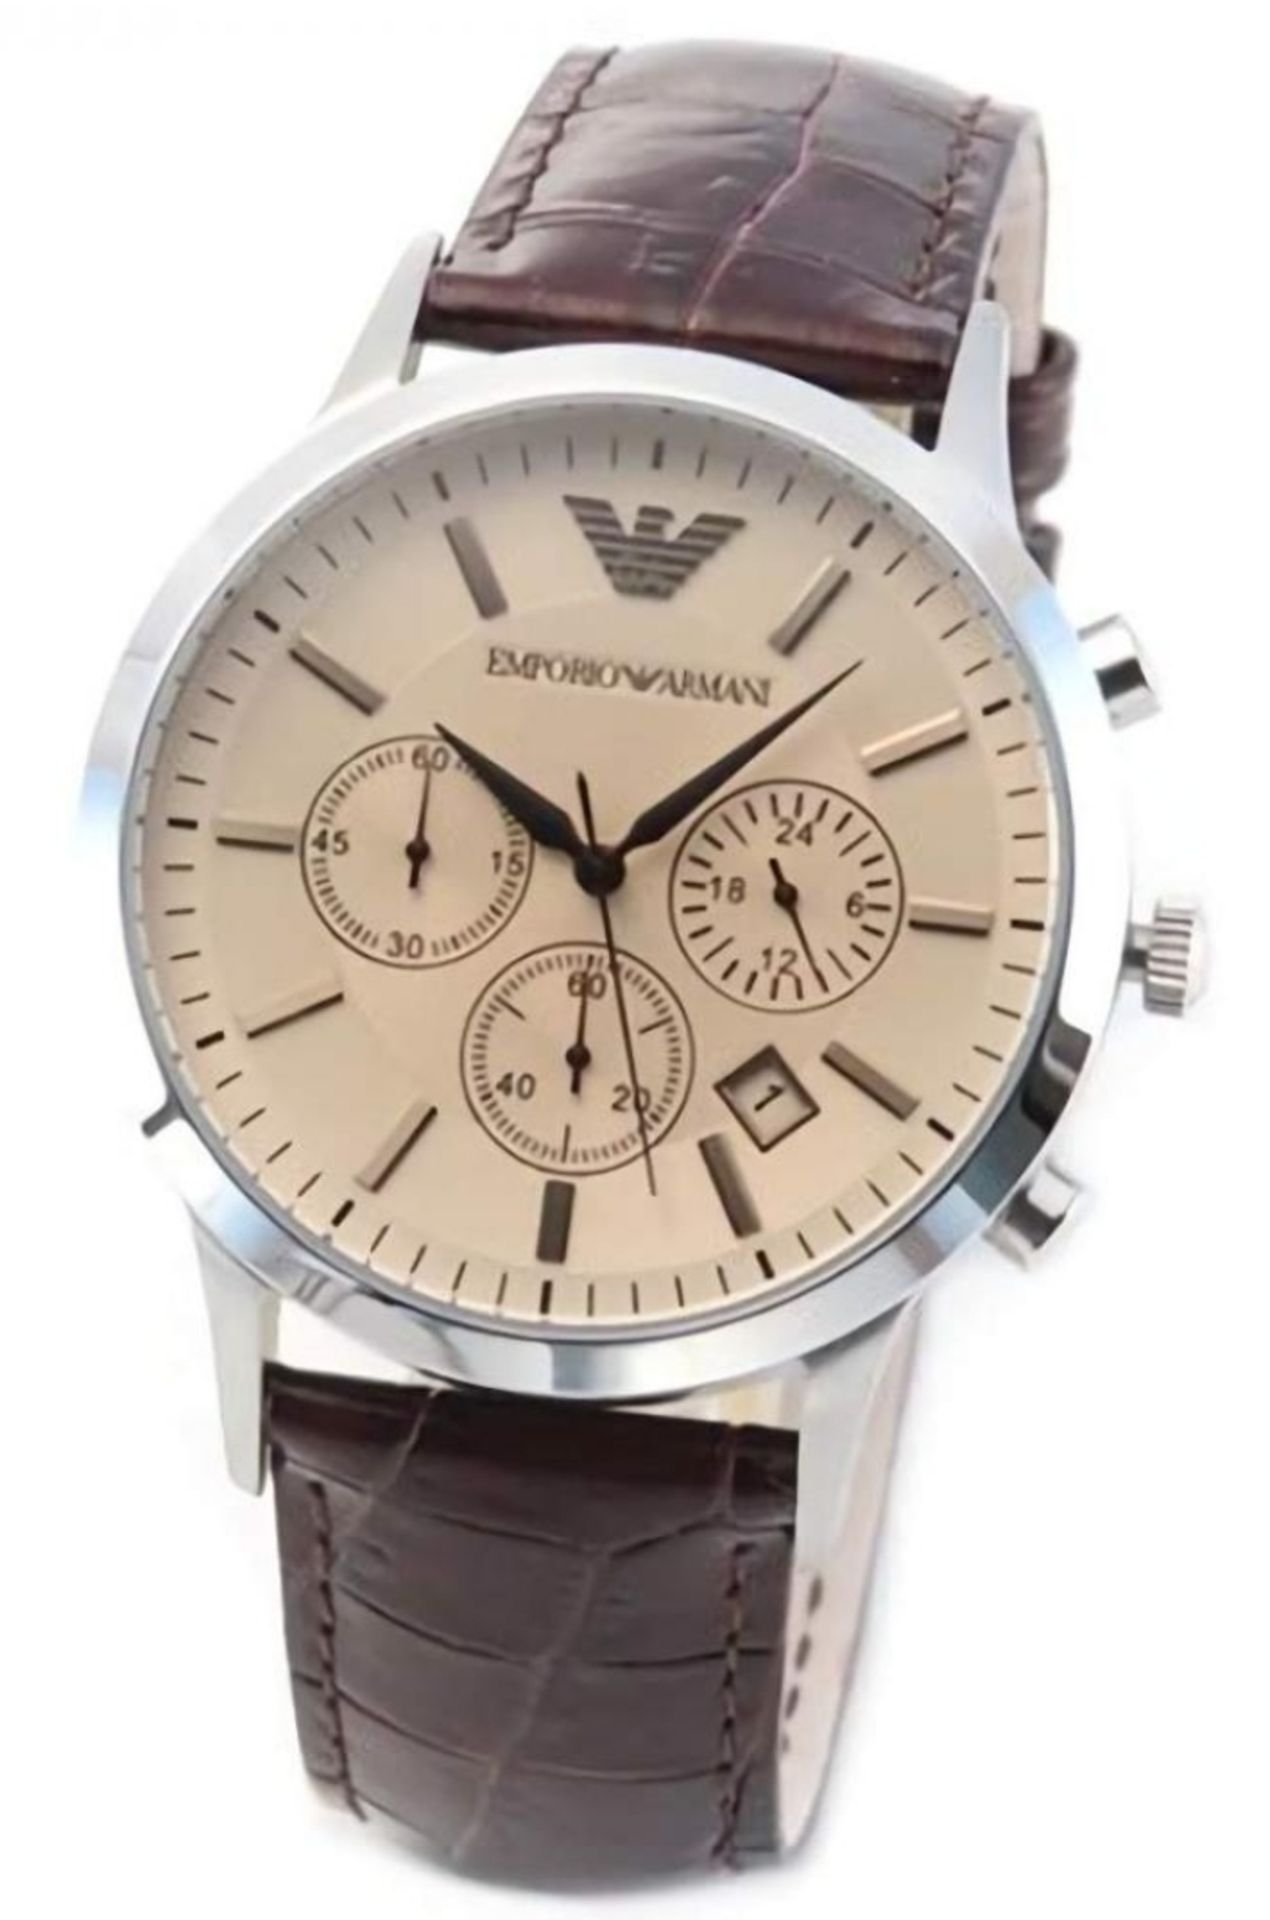 Emporio Armani AR2433 Men's Renato Brown Leather Strap Chronograph Watch - Image 2 of 6